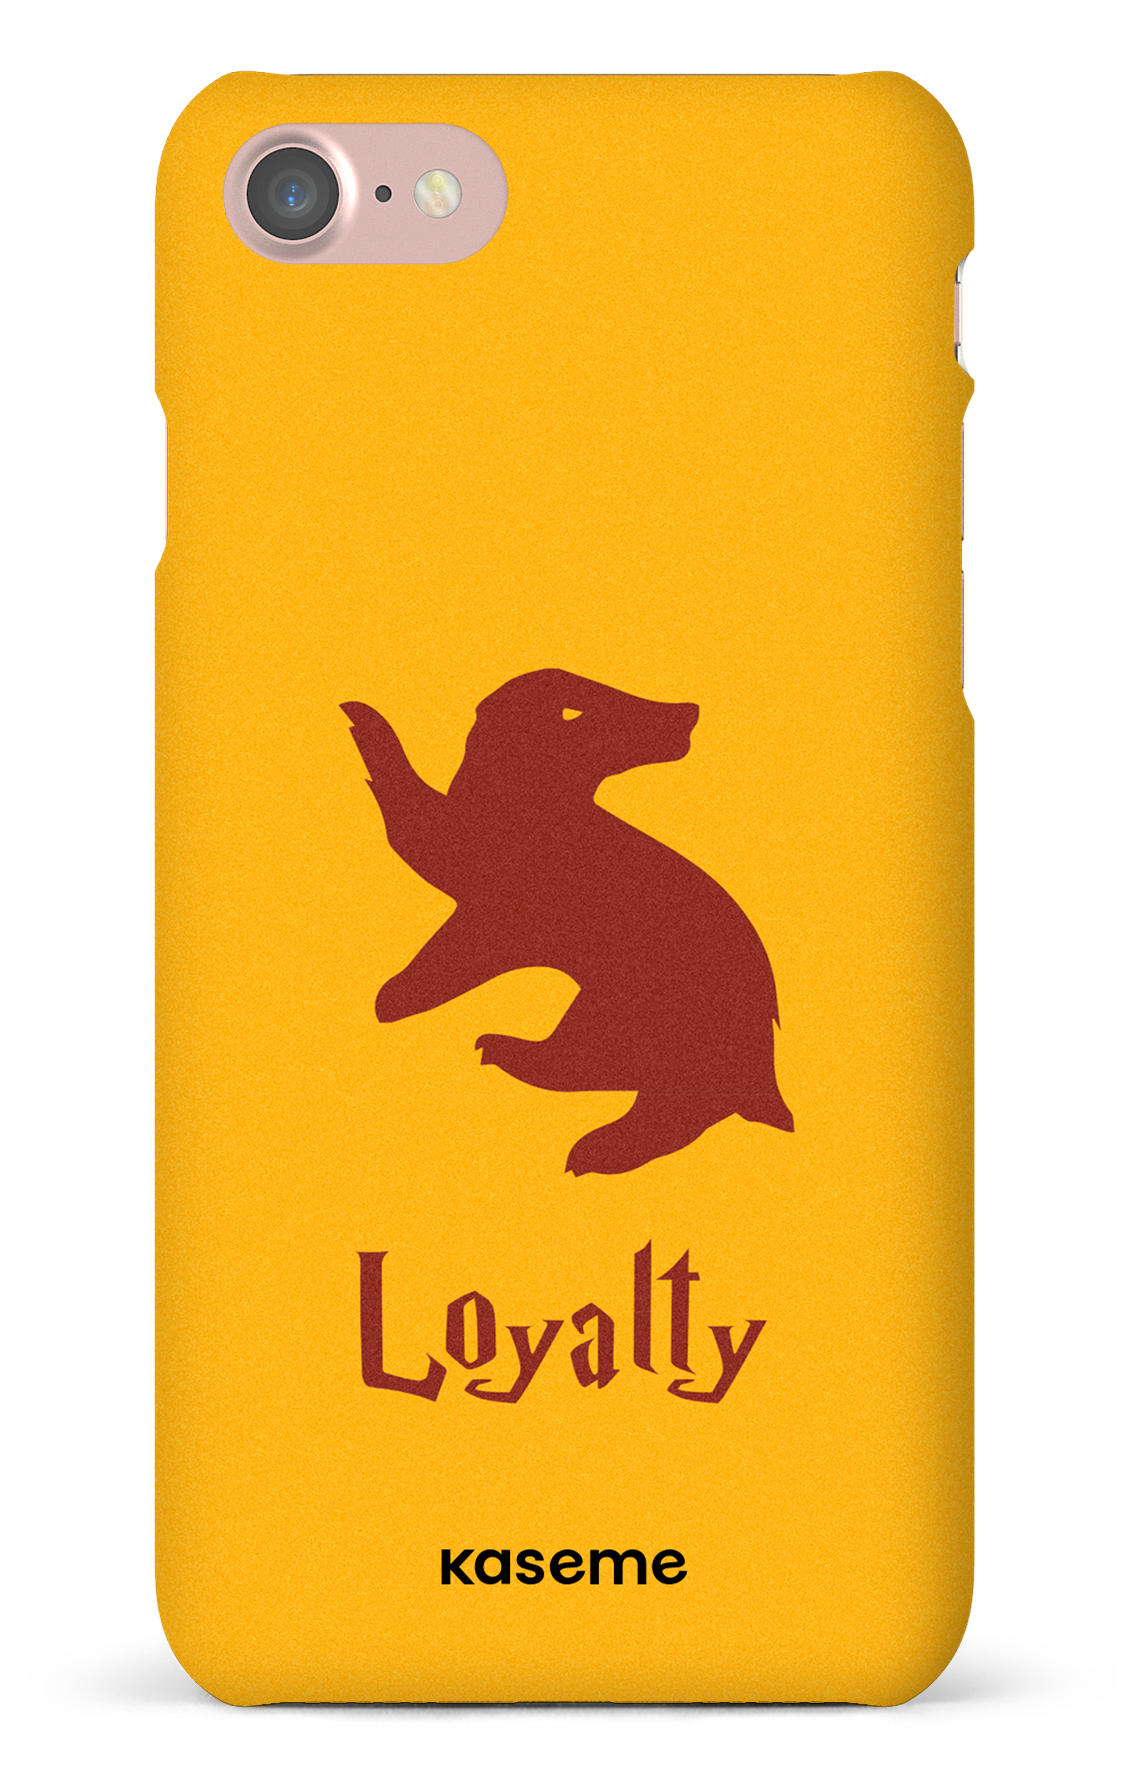 Loyalty - iPhone 7